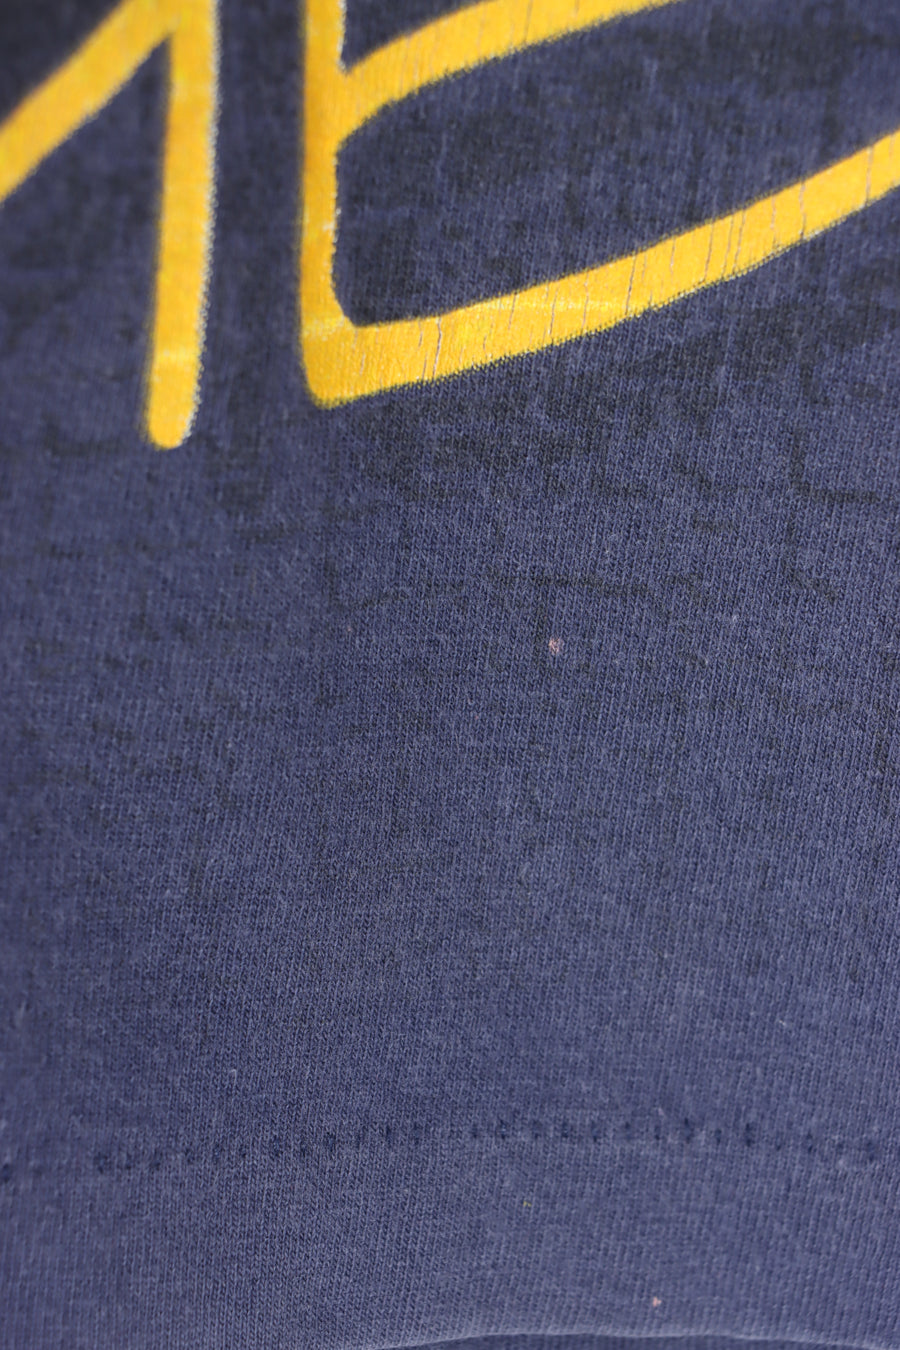 MLB 1996 Atlanta Braves Single Stitch T-Shirt USA Made (S)